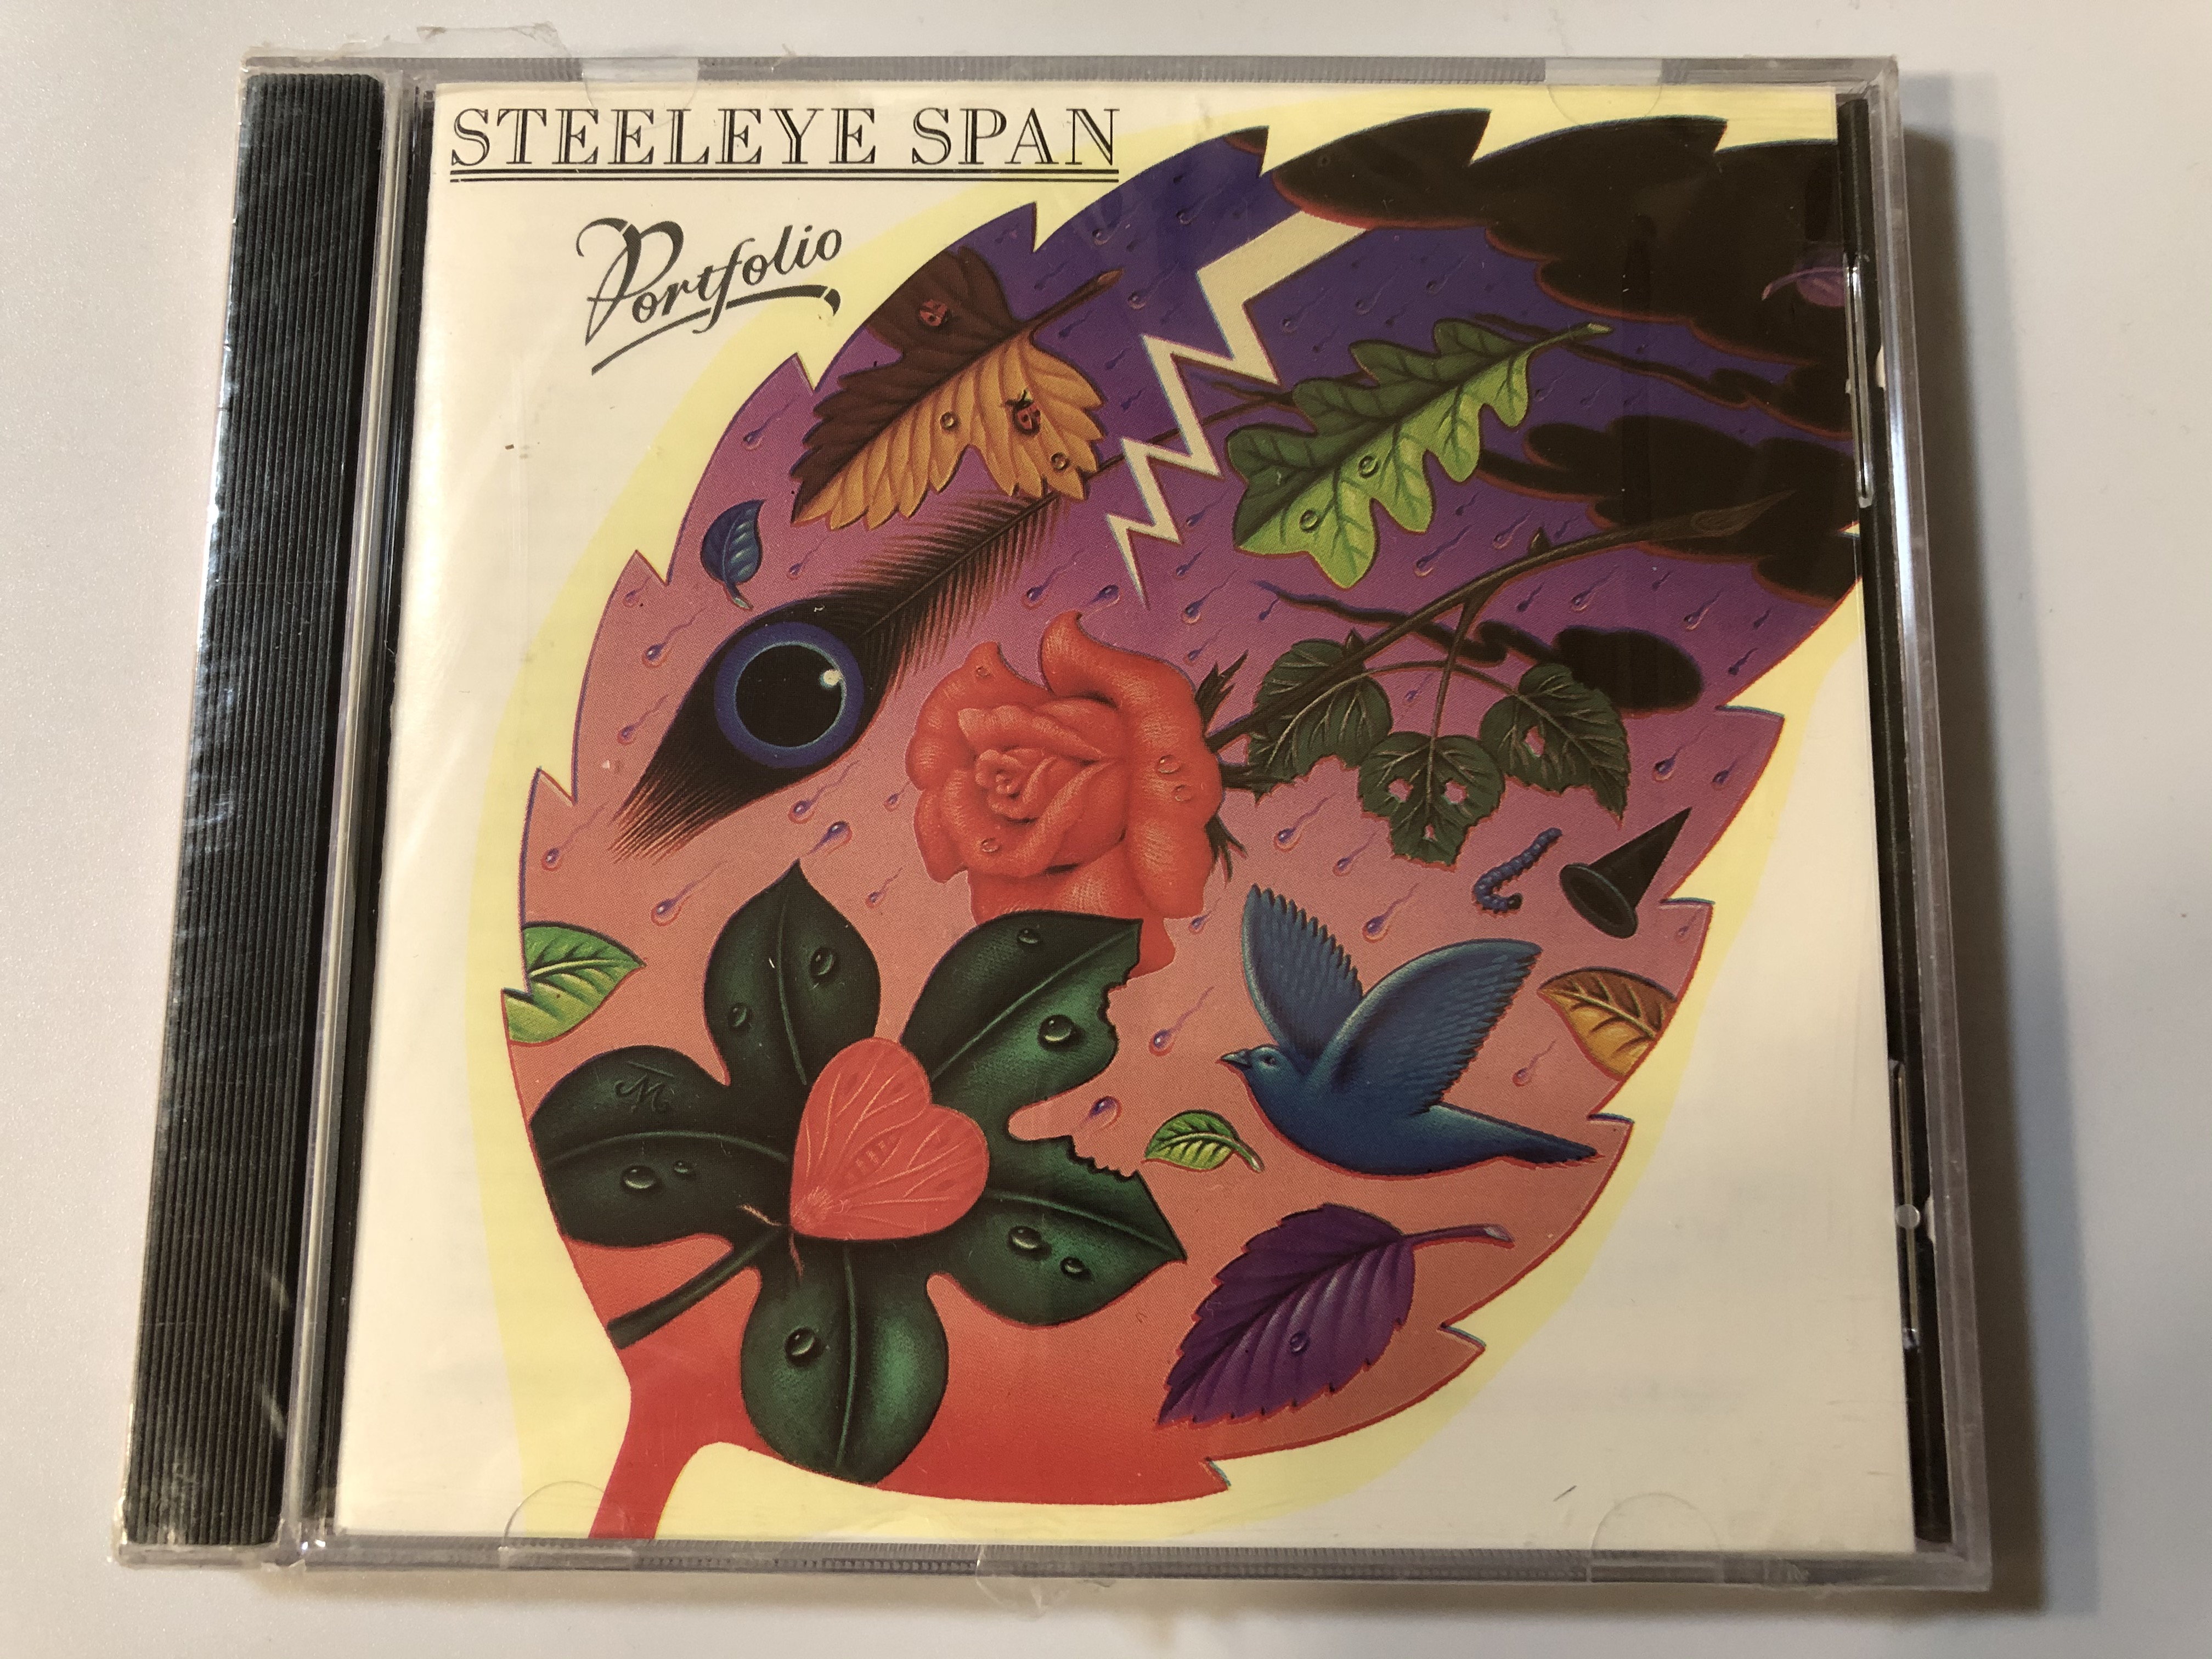 steeleye-span-portfolio-shanachie-audio-cd-1989-7907172-1-.jpg